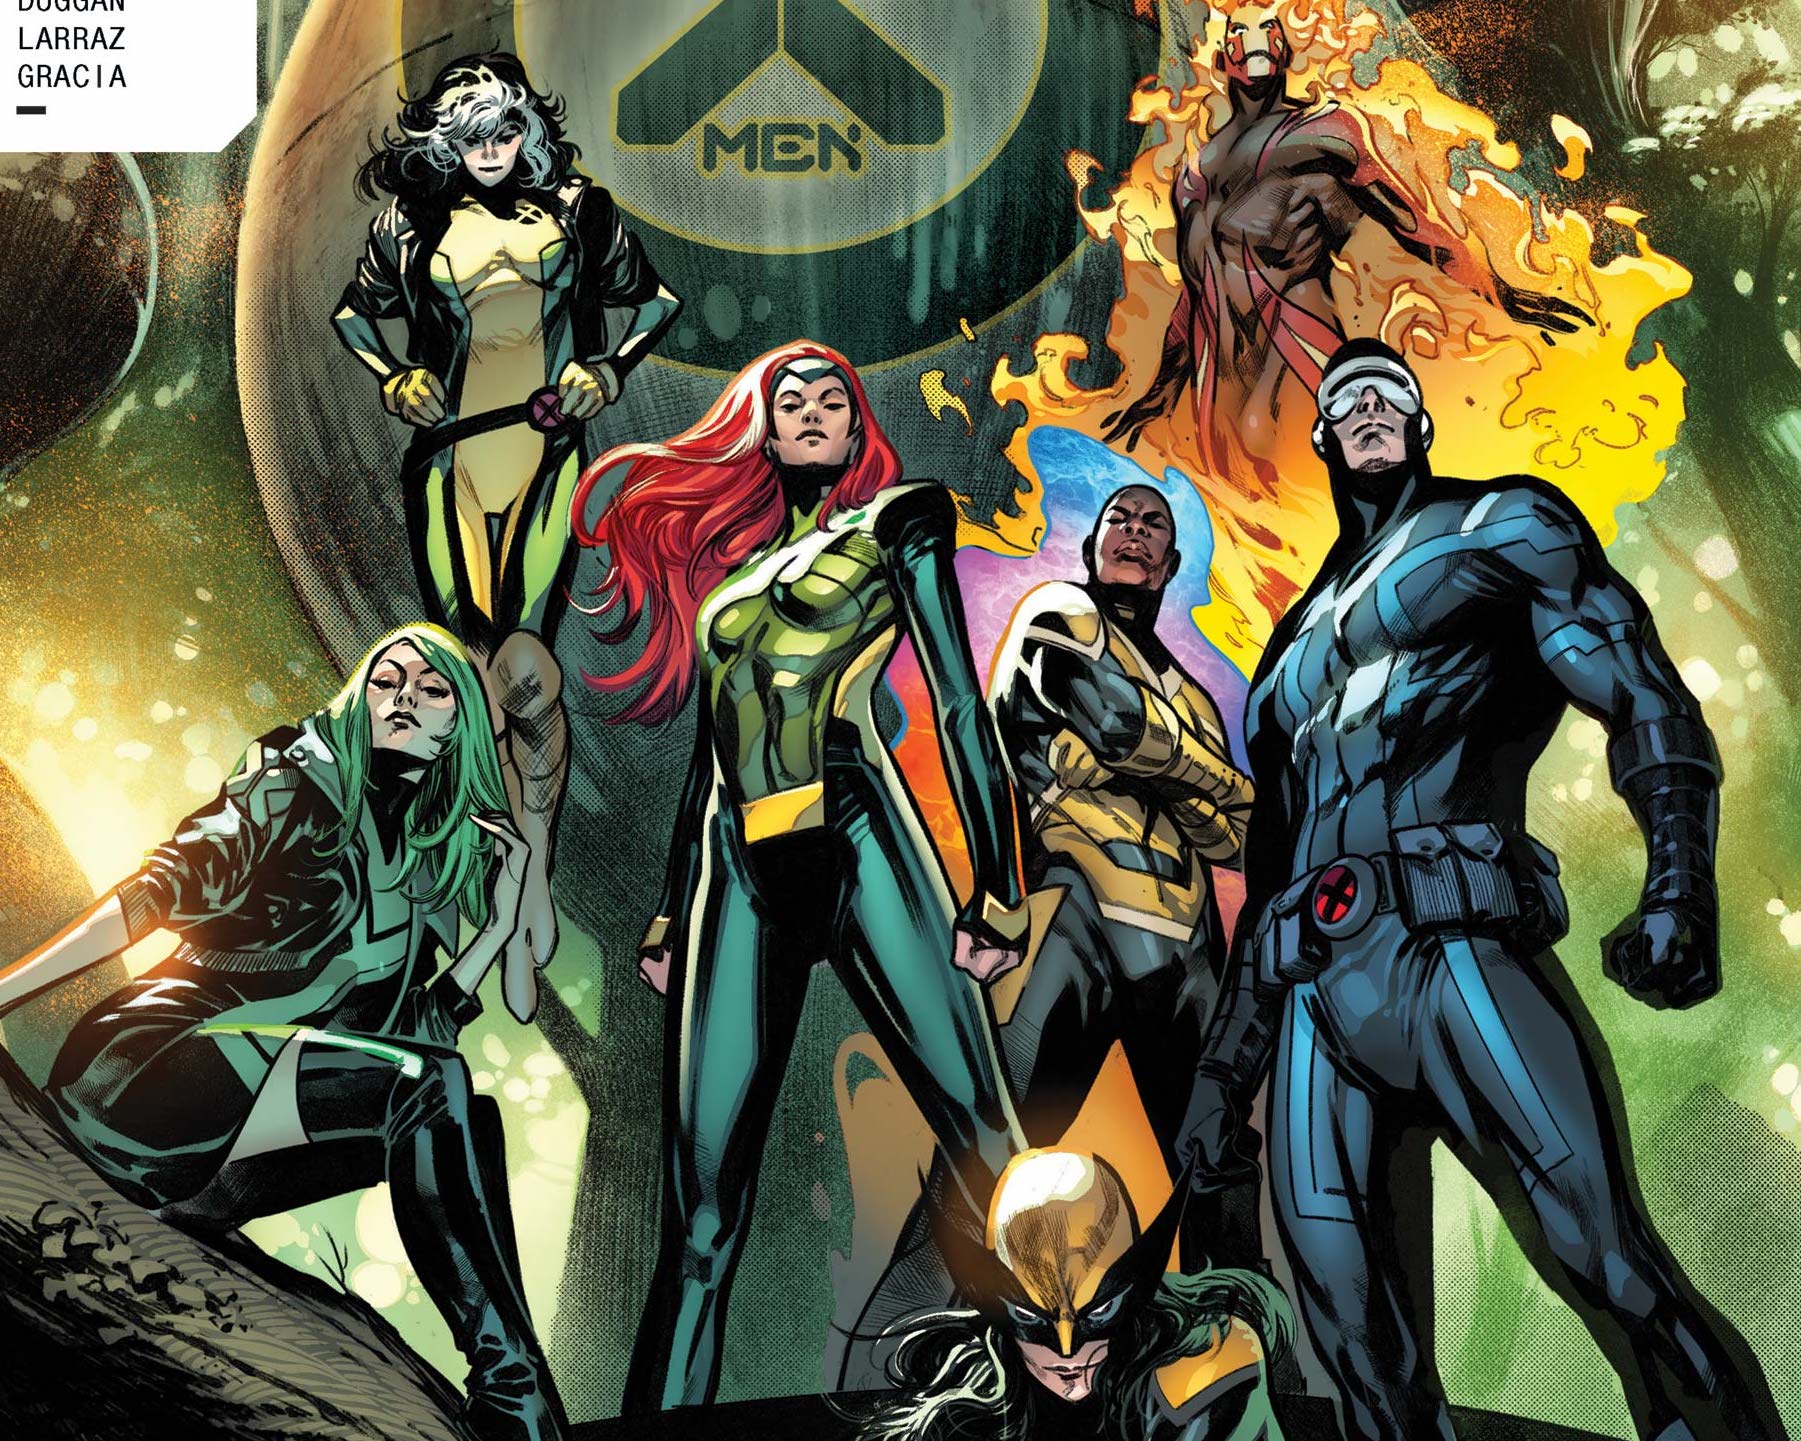 X-Men #12